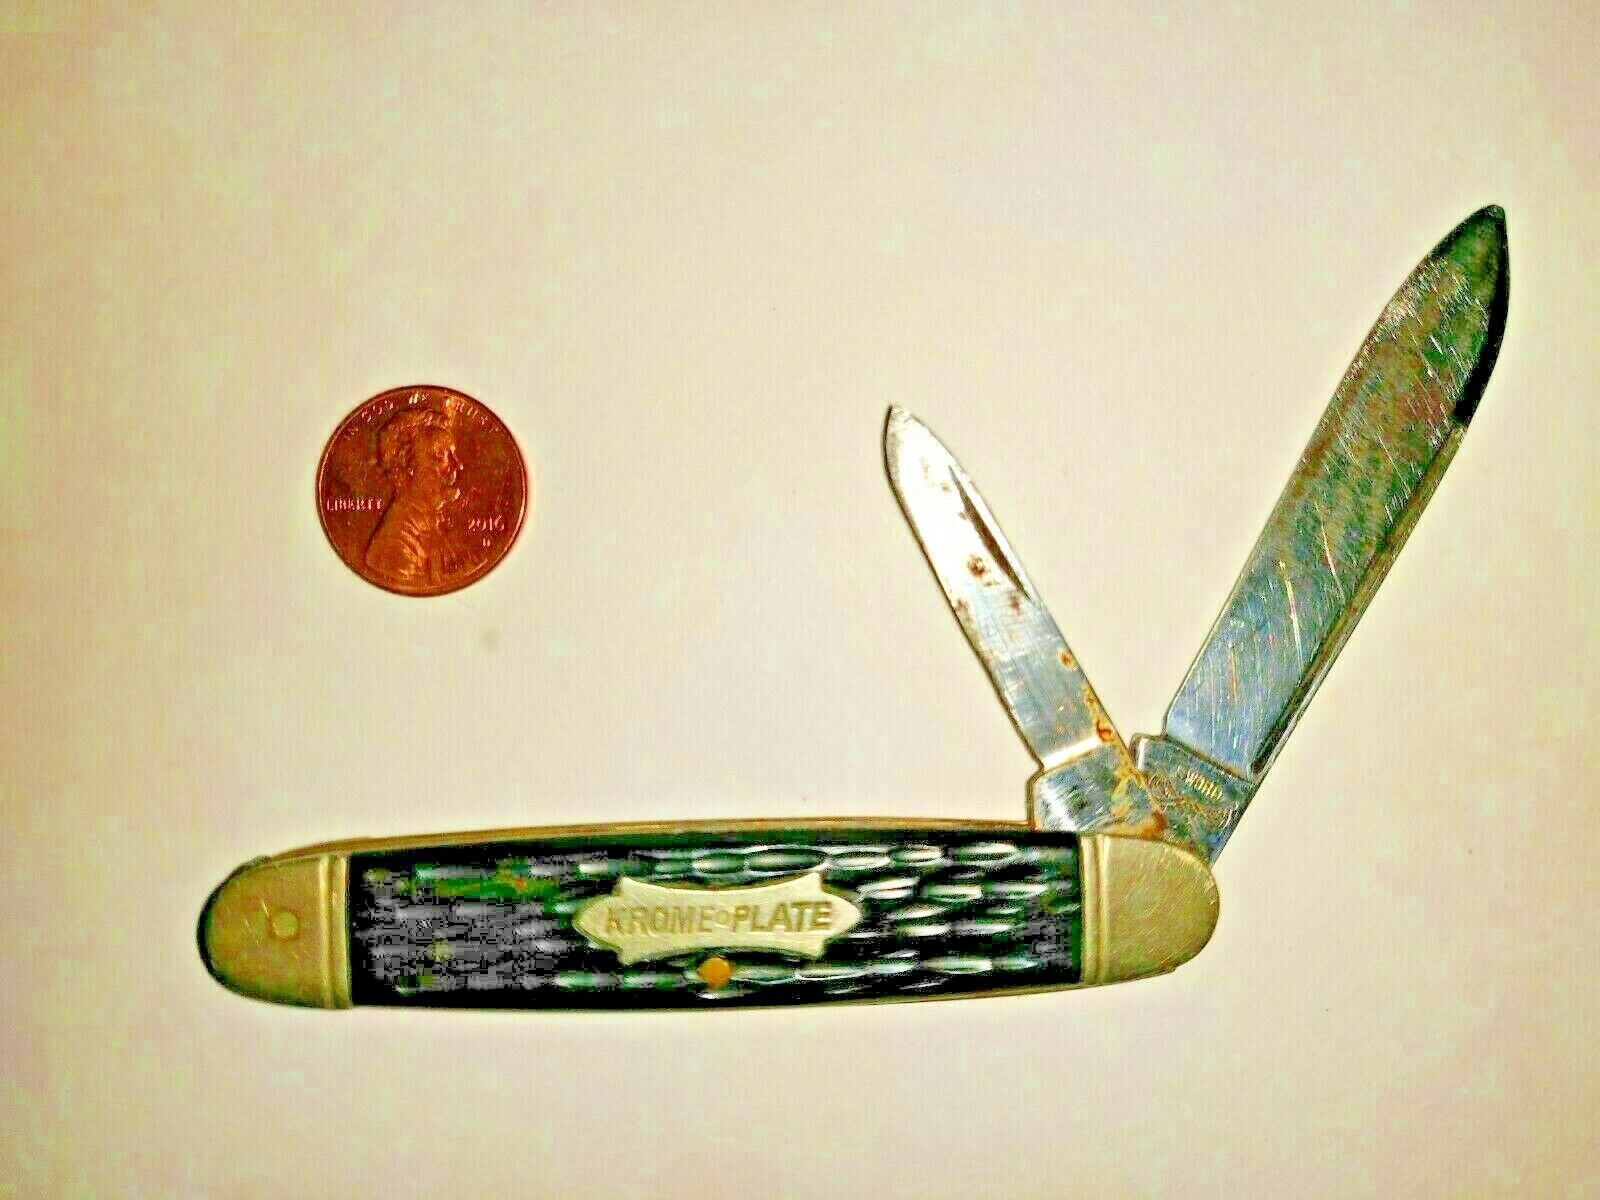 Vintage Camillus Sword Krome Plate Pen Knife